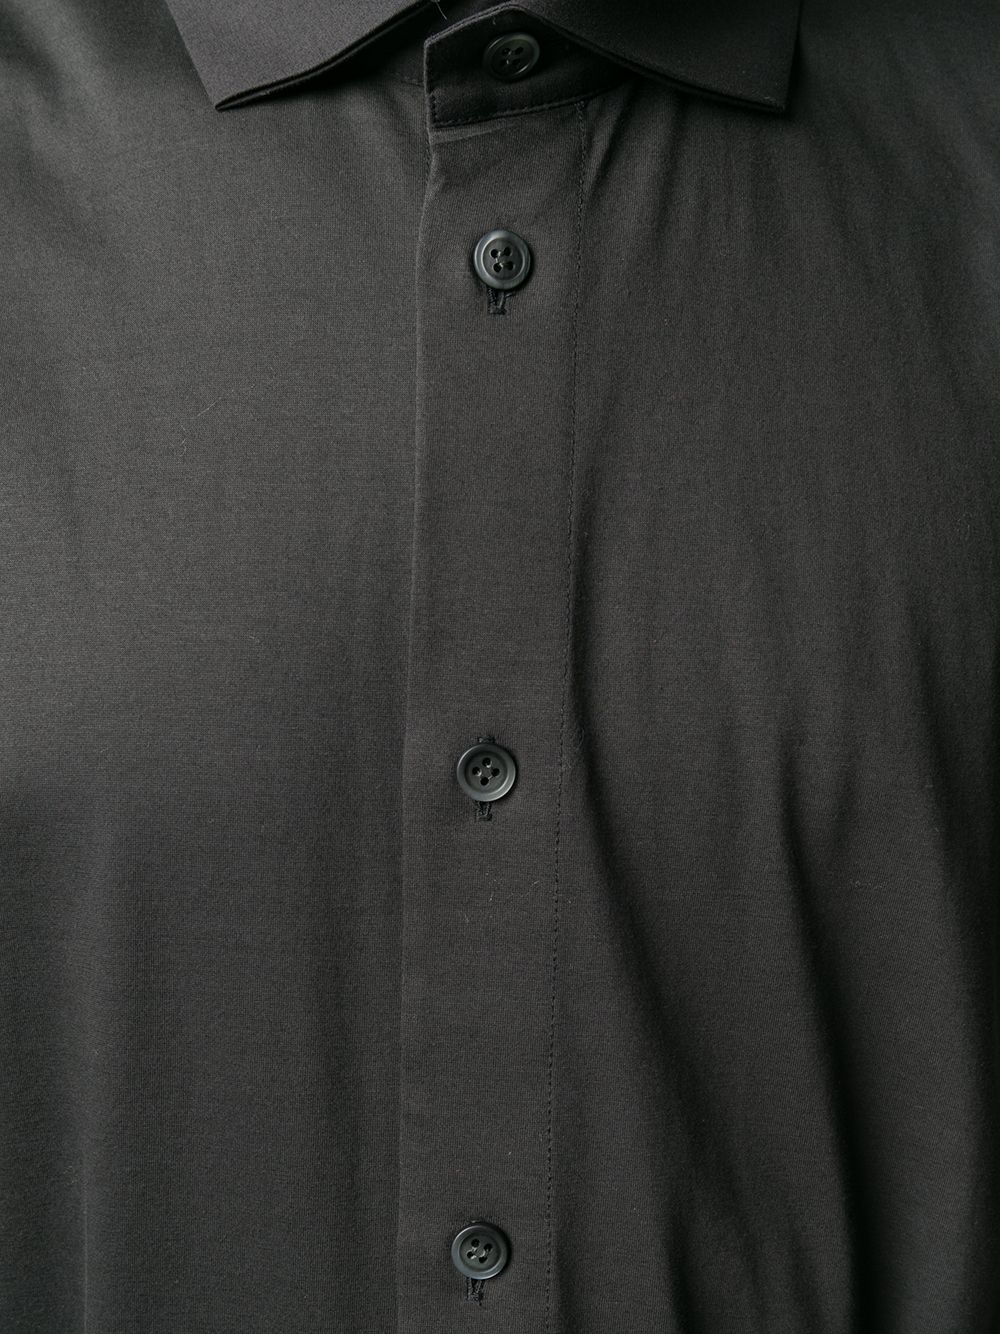 фото Homme plissé issey miyake рубашка свободного кроя с укороченными рукавами